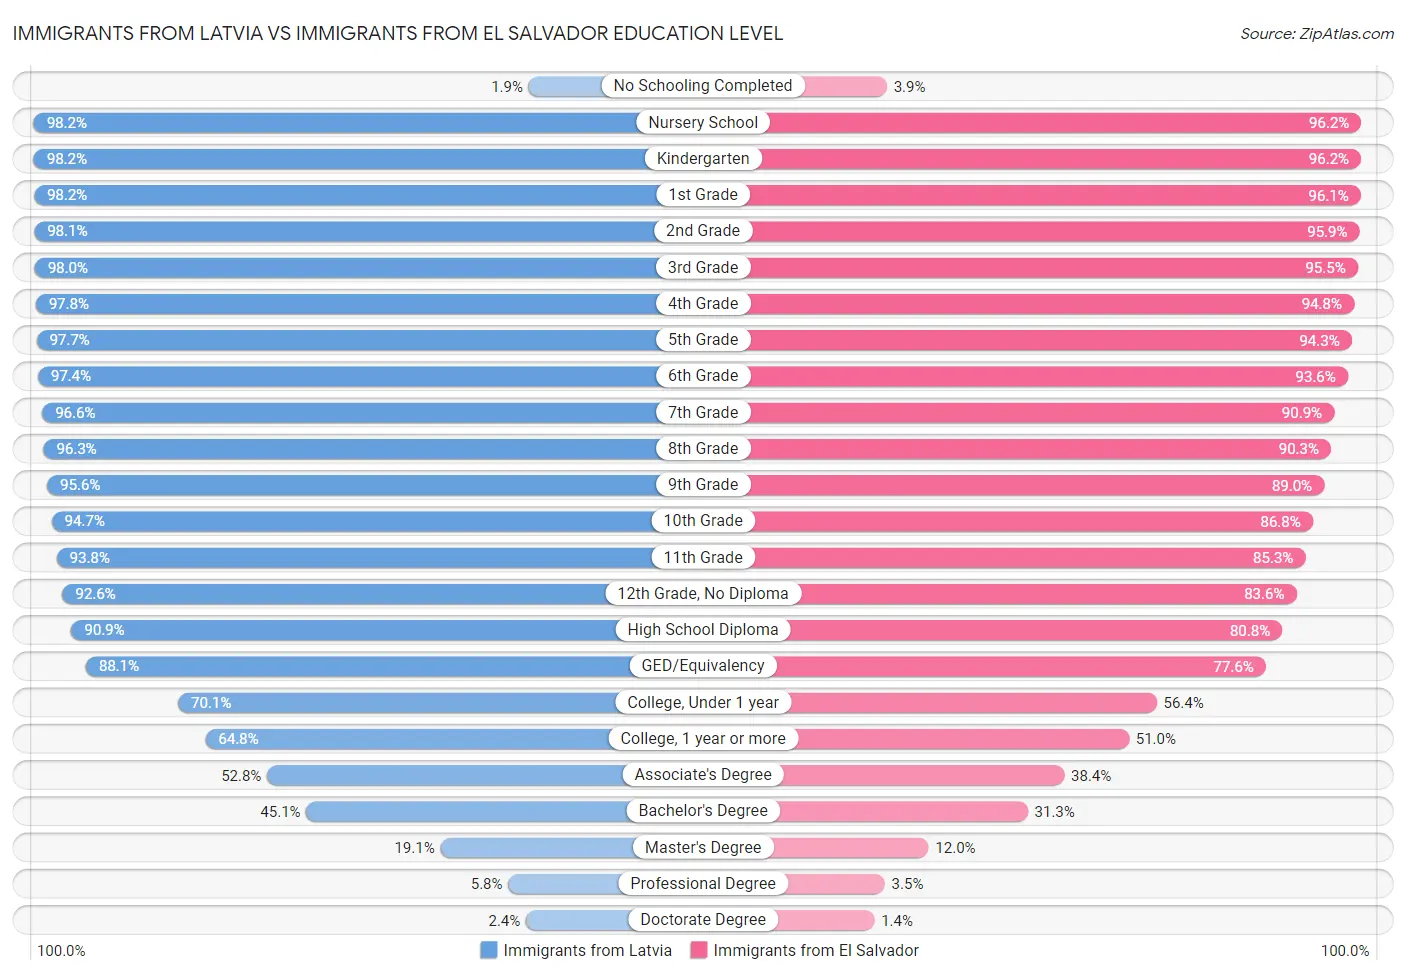 Immigrants from Latvia vs Immigrants from El Salvador Education Level